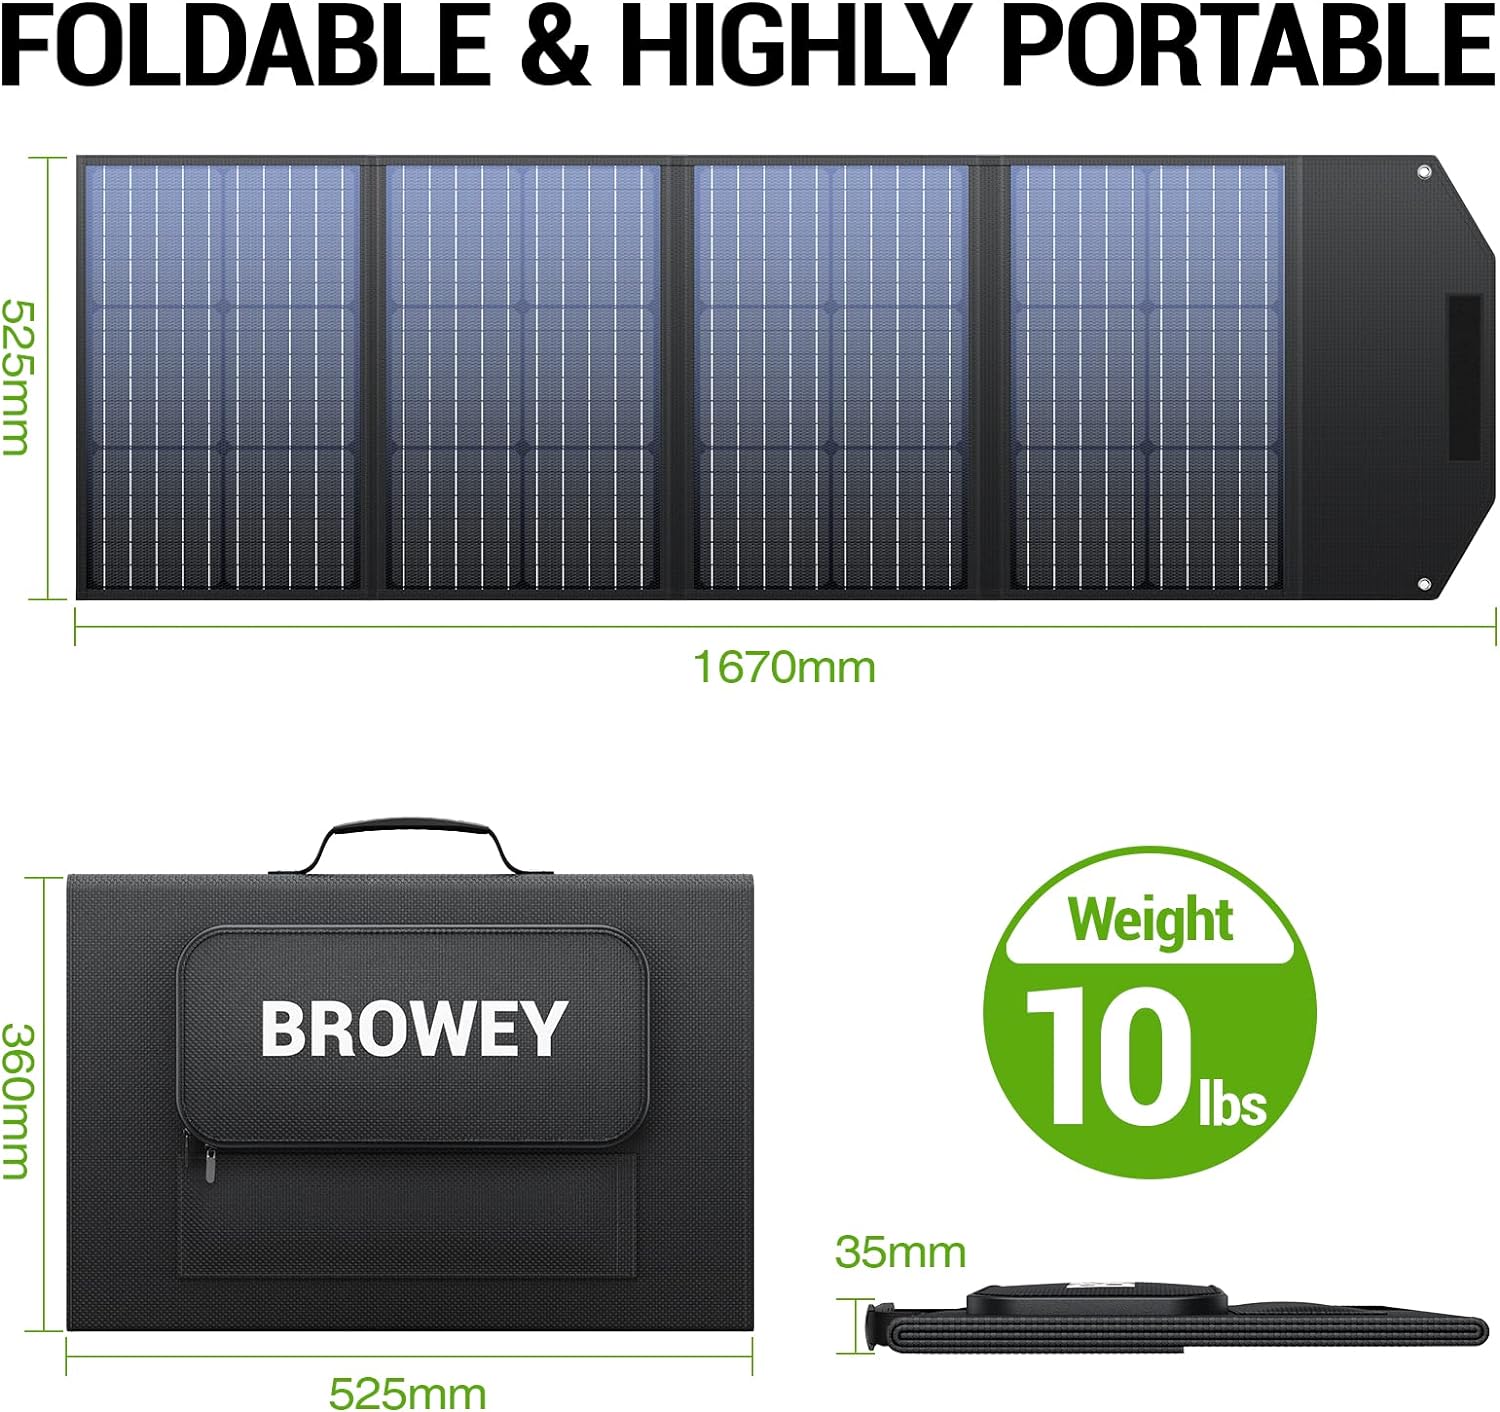 BROWEY 120W Solar Panel Review